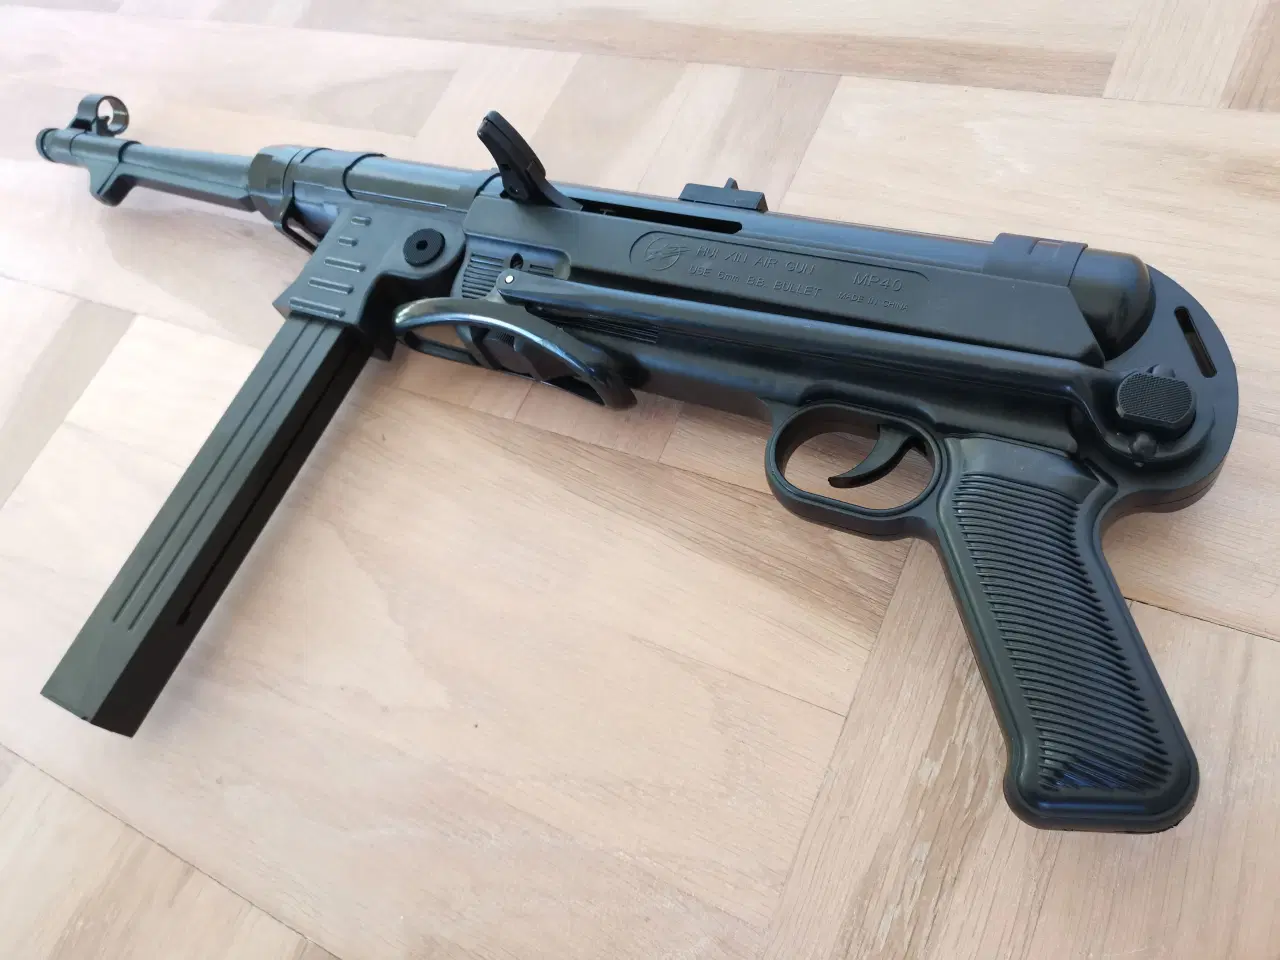 Billede 1 - Tysk MP40 Softgun